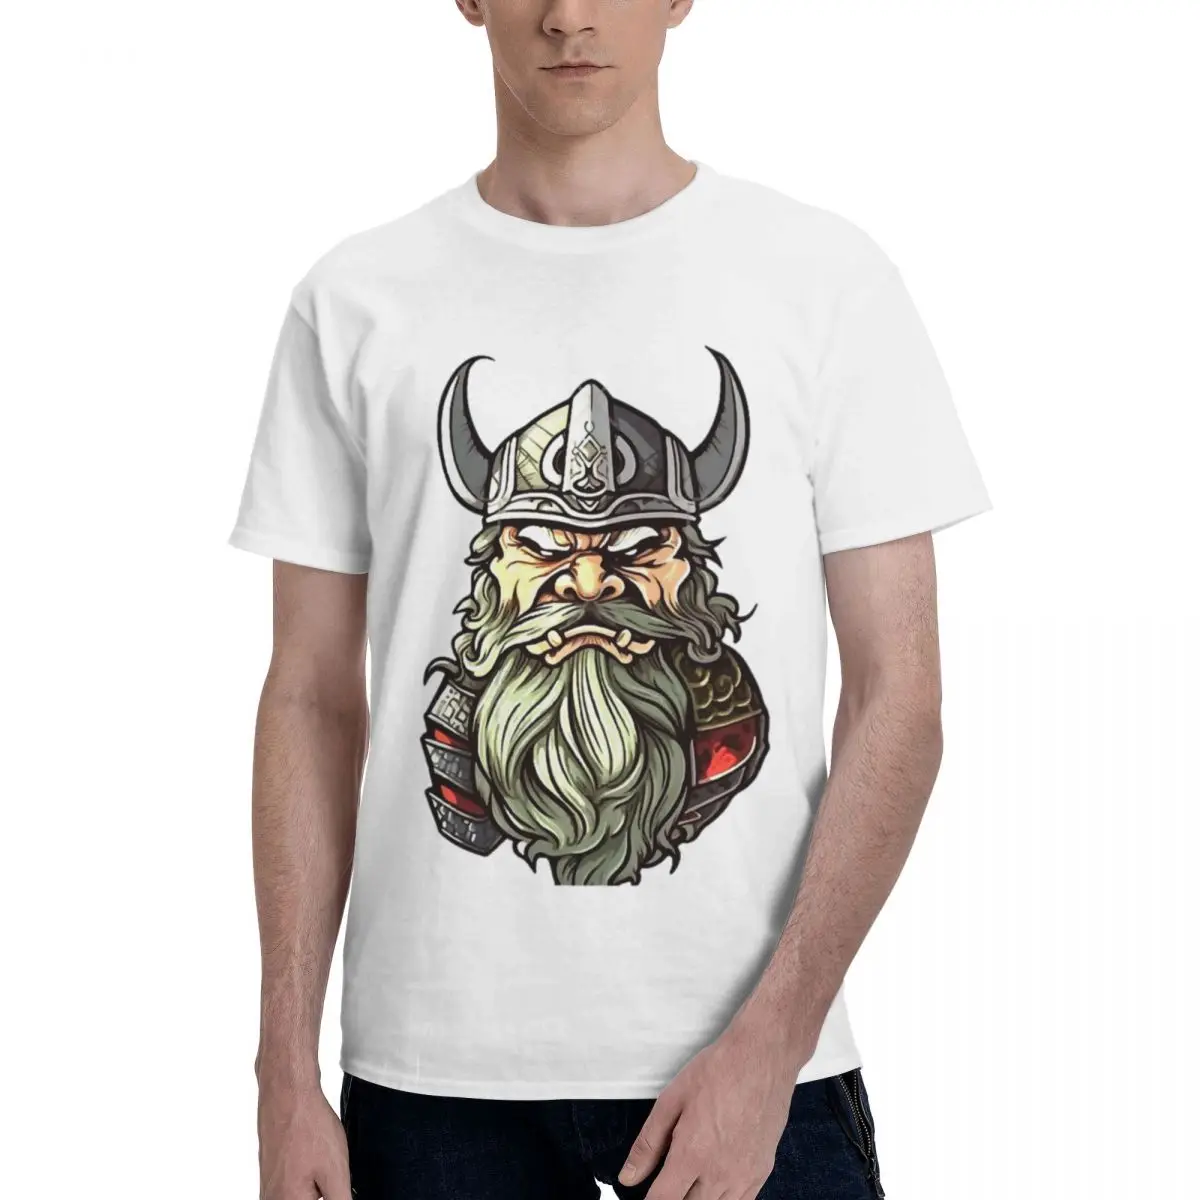 Cool Norse Warrior T-Shirt Men Clothing Viking Warrior Tops 100% Cotton